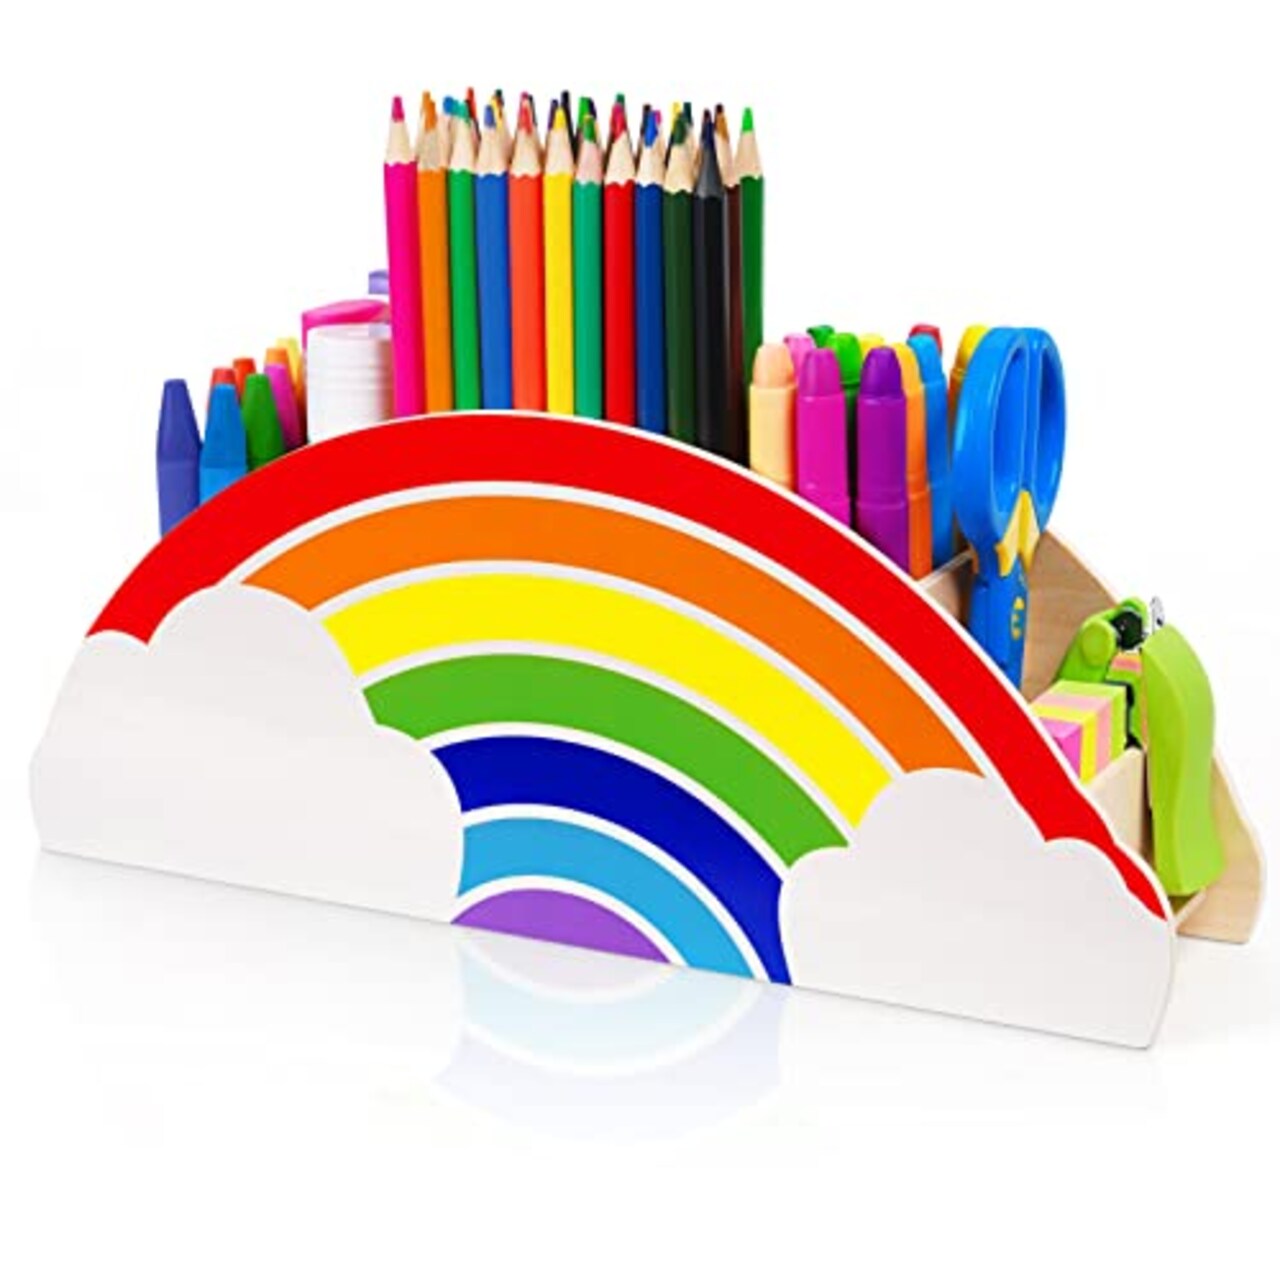 GAMENOTE Wooden Pen Holder & Pencil Holders - Rainbow Supply Caddy